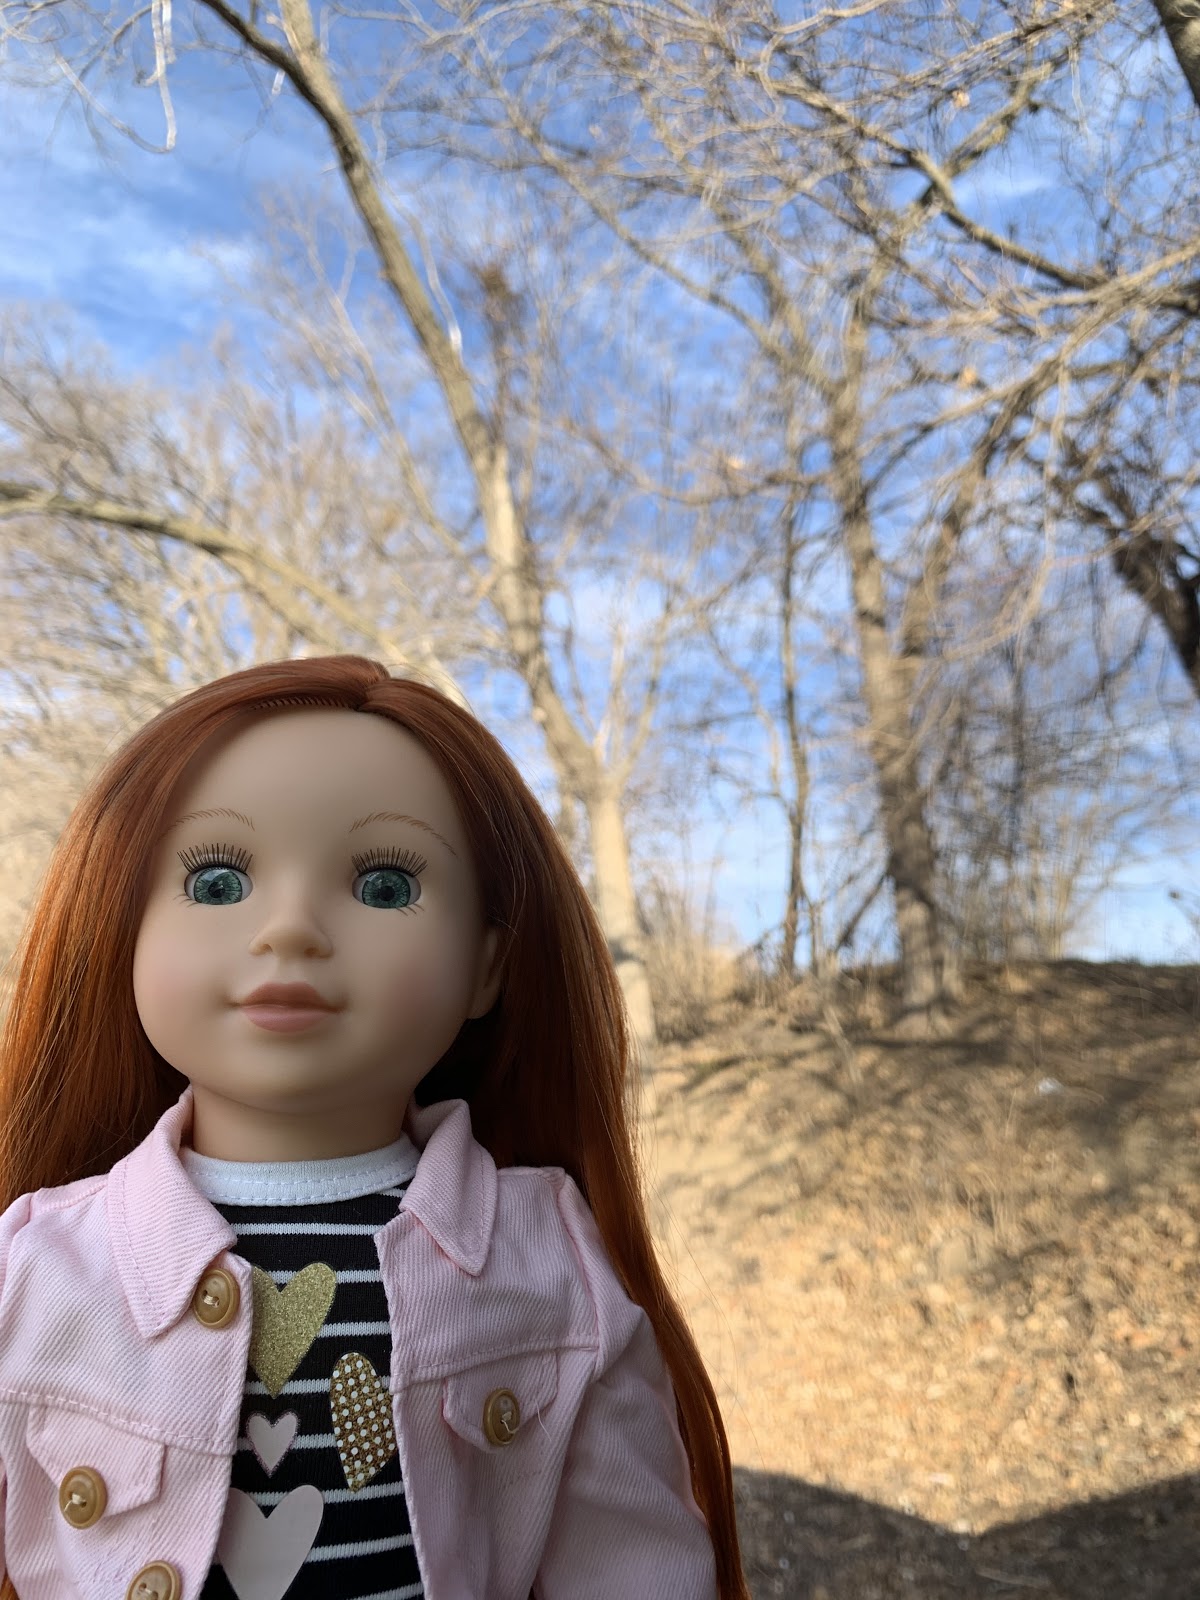 Arlee Doll, 18-inch Doll Red Hair Blue Eyes